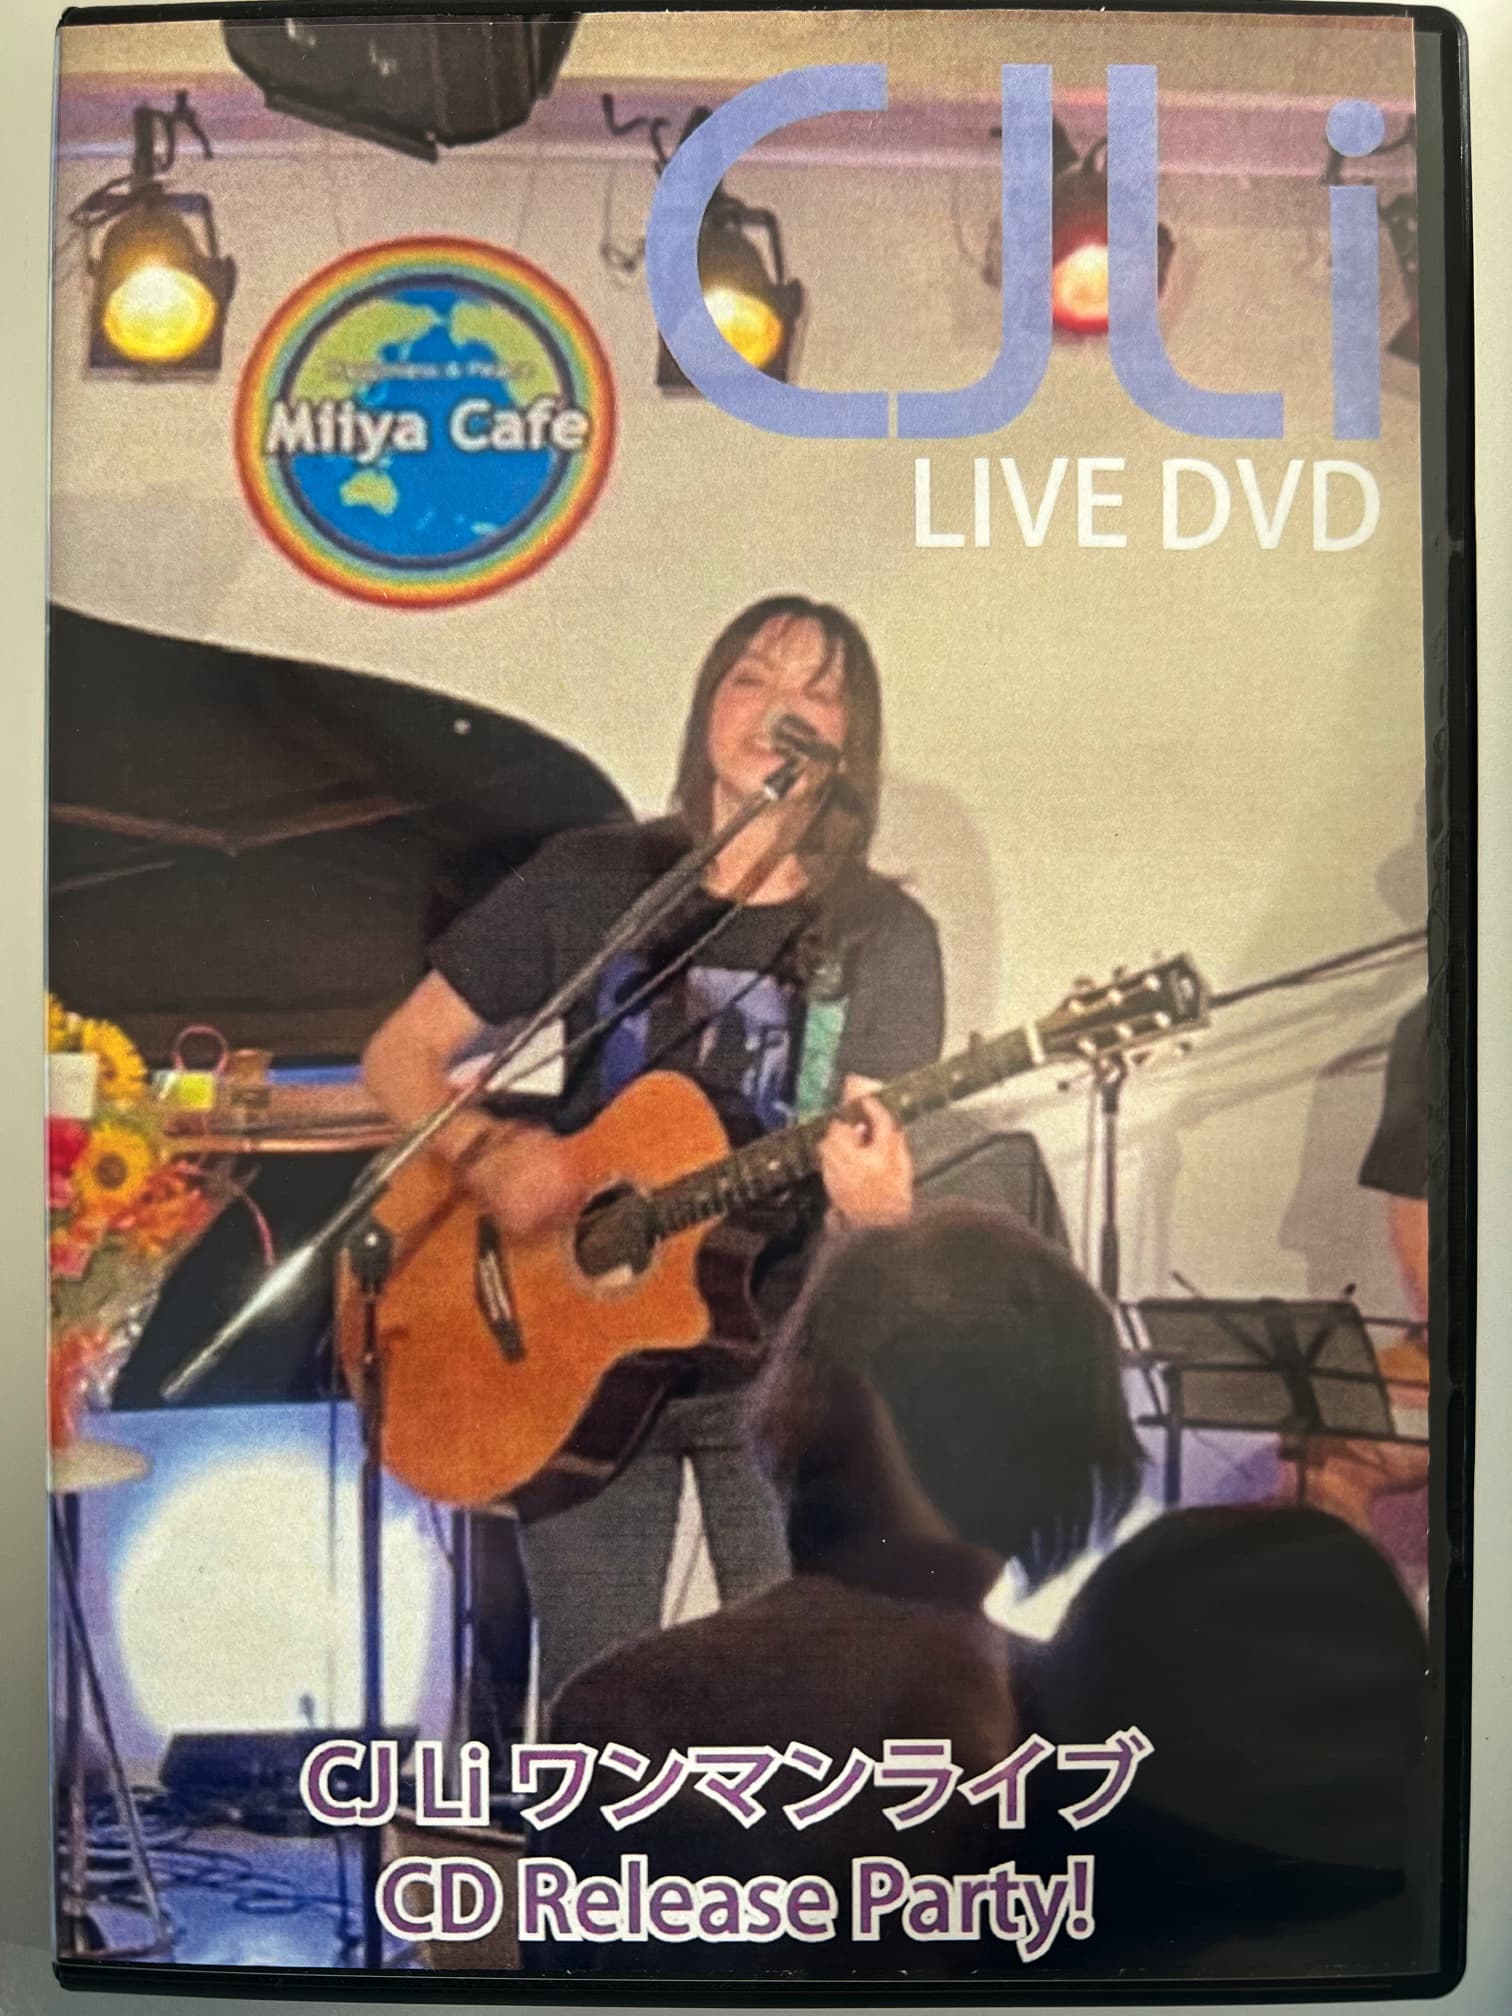 CJ Liワンマンライブ CD Release Party! LIVE DVD